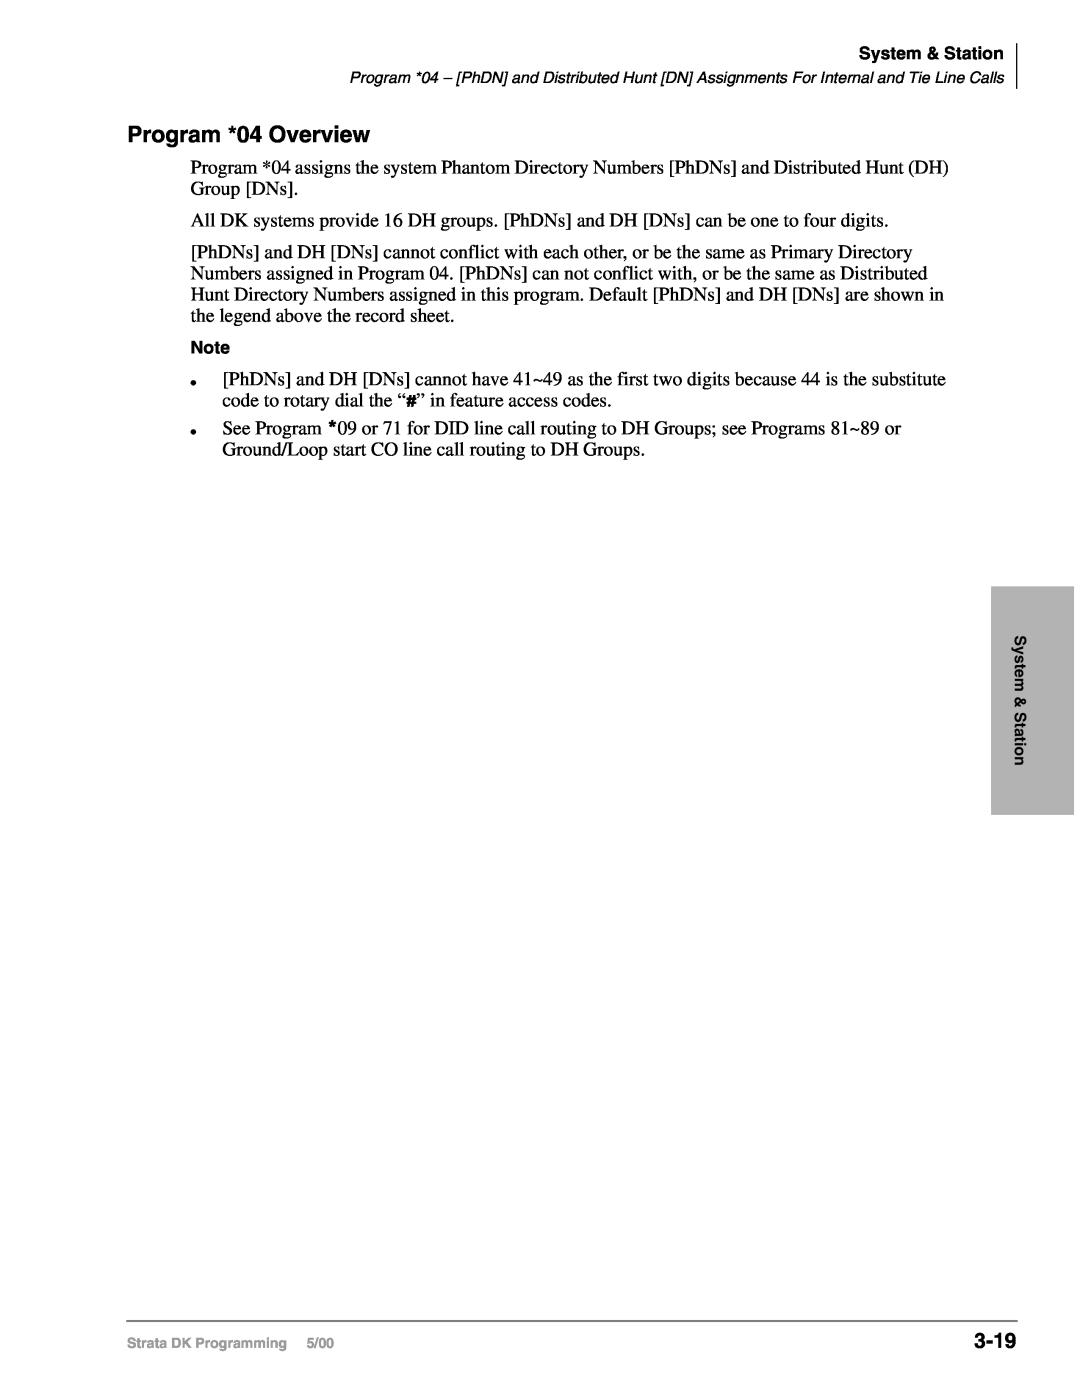 Toshiba DK424I, dk14, DK40I manual Program *04 Overview, 3-19 